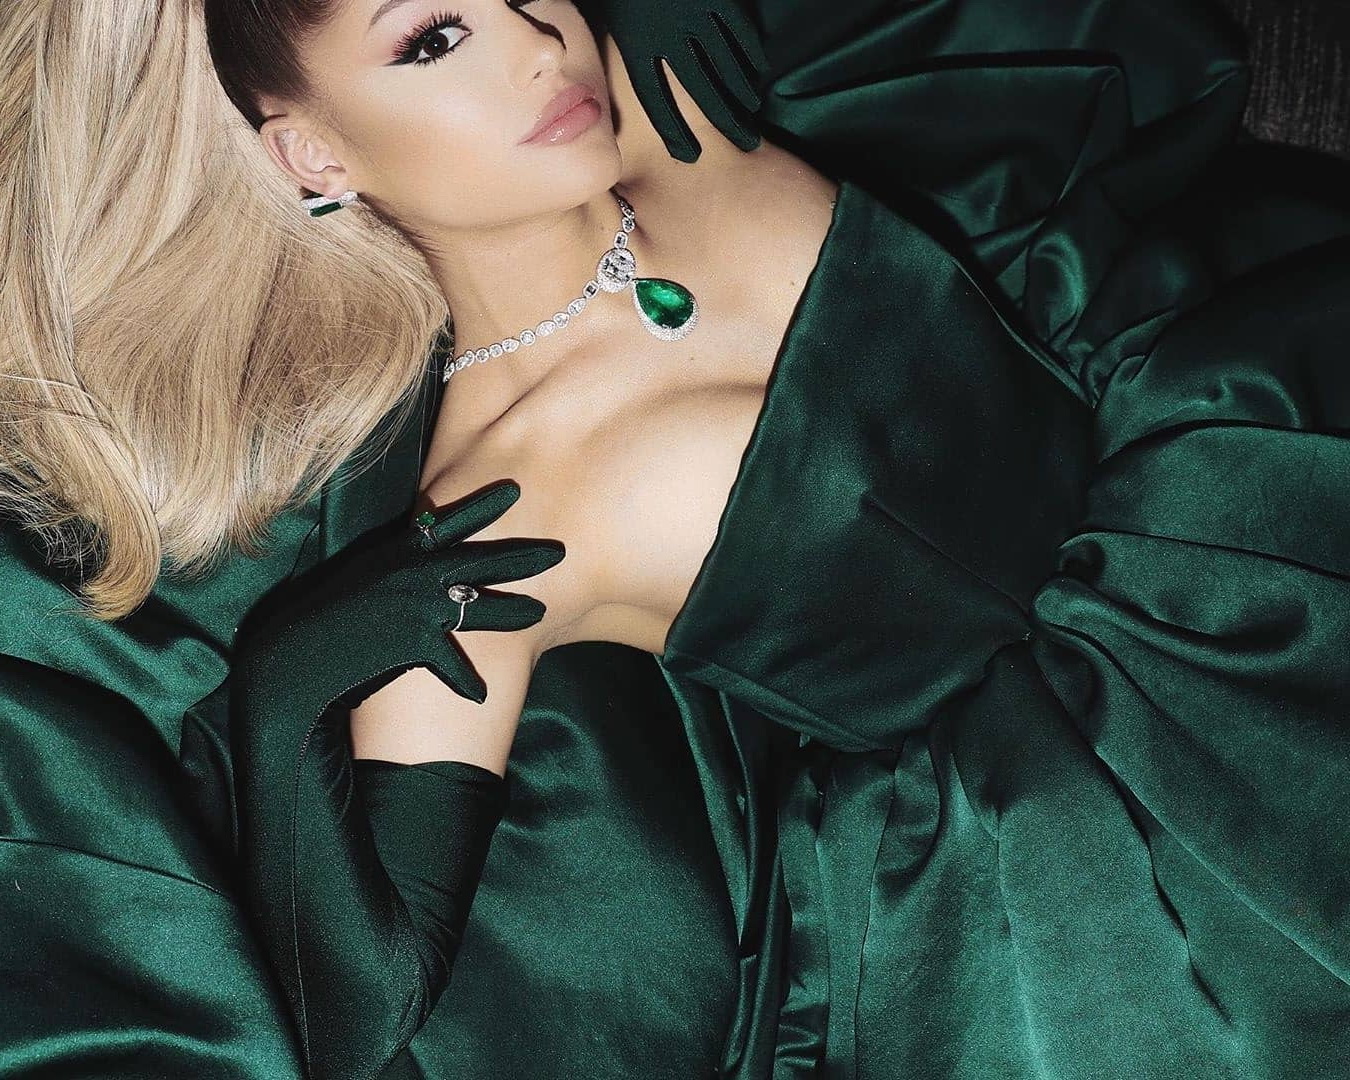 Ariana Grande â€“ Instagram and social media